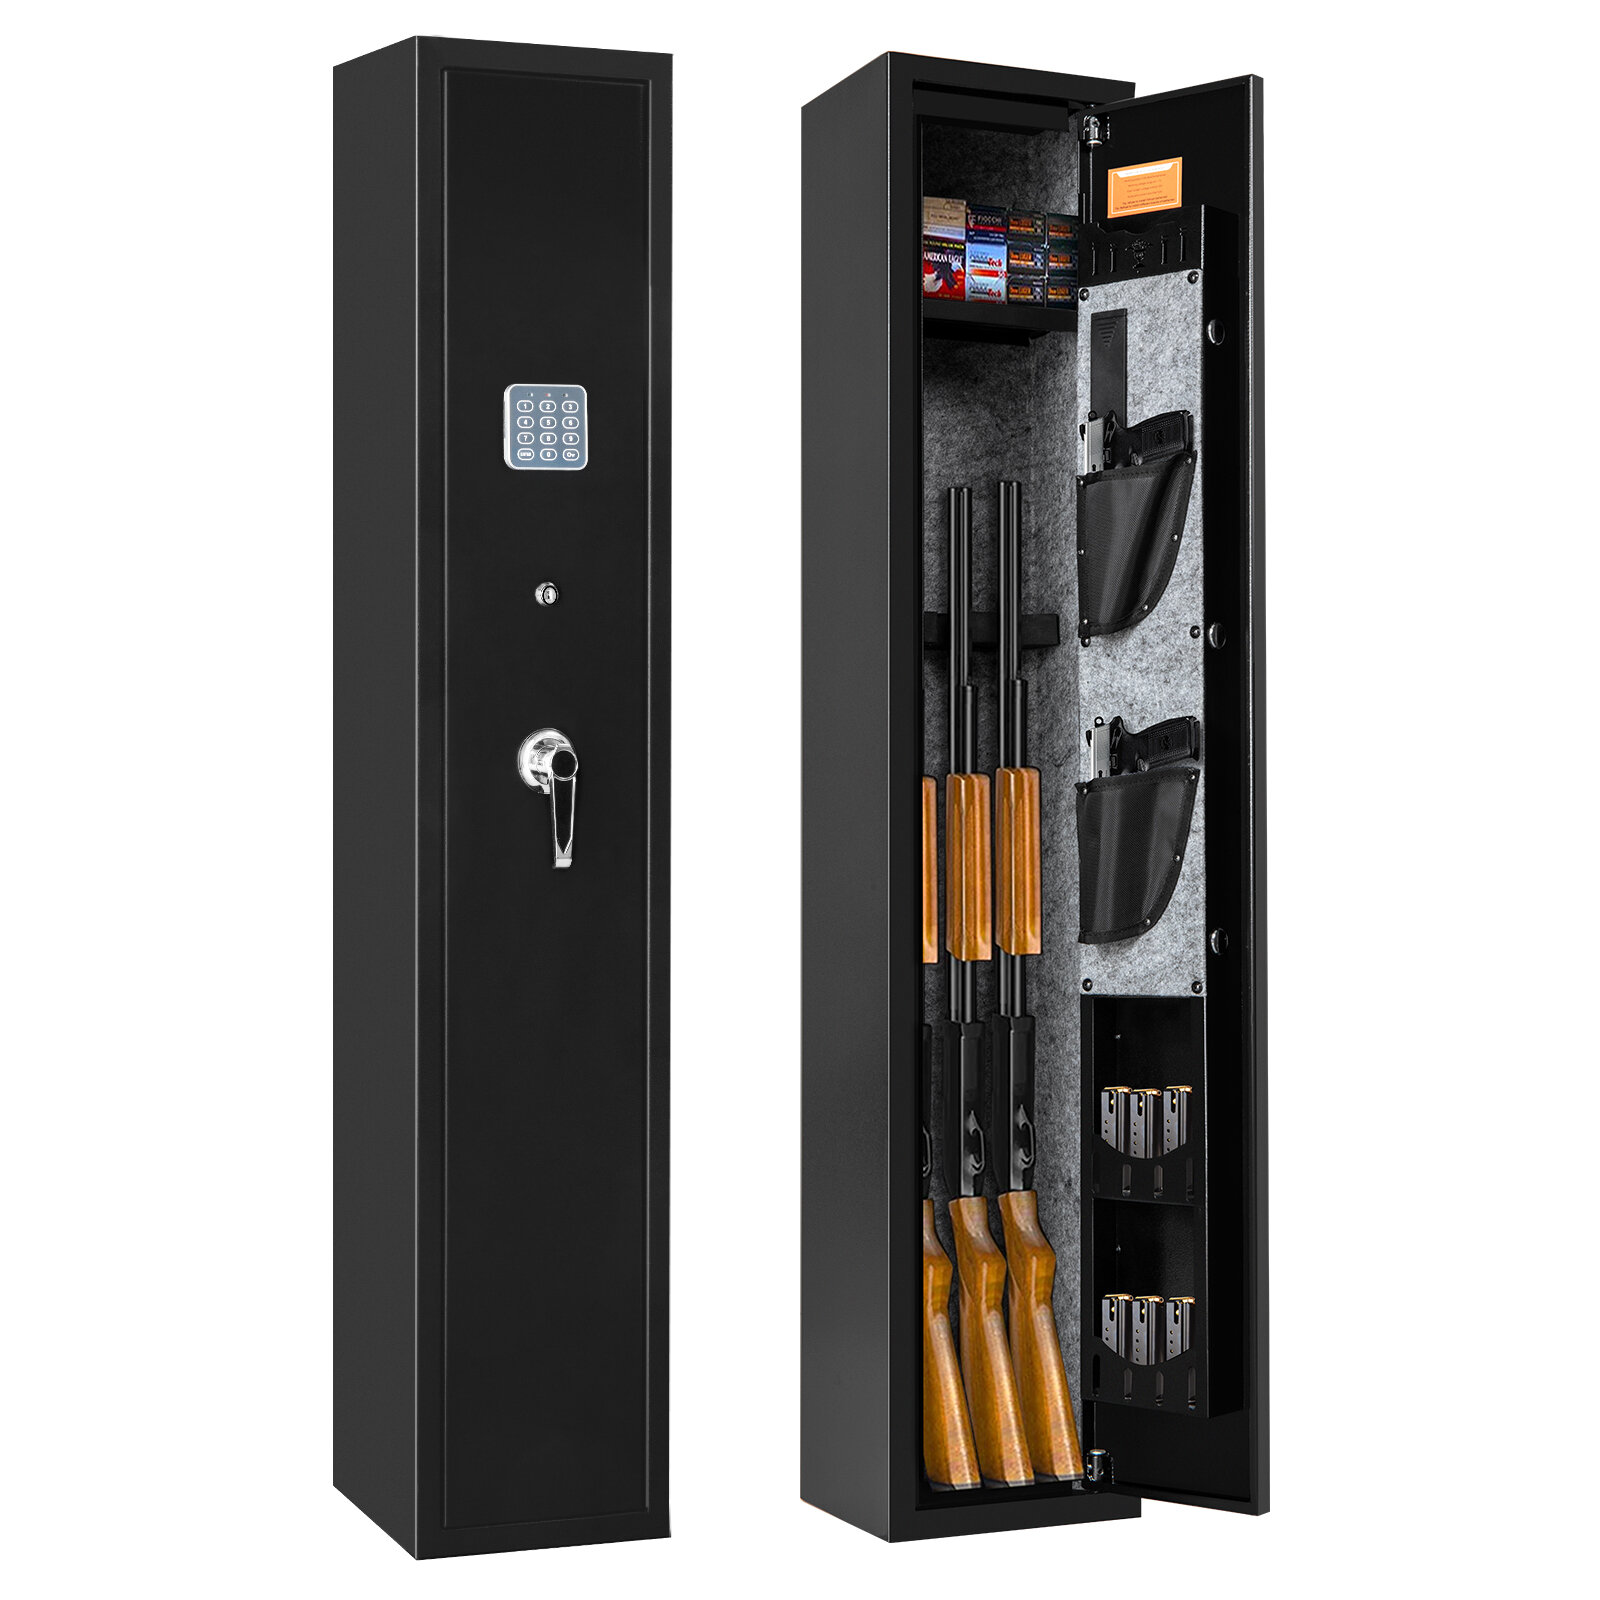 

BlackSmith Key Safes for Home Pistols Quick Access Long Key Safe with Keys and Keypad 3 Key Safe Wall Mount Gun Cabinet